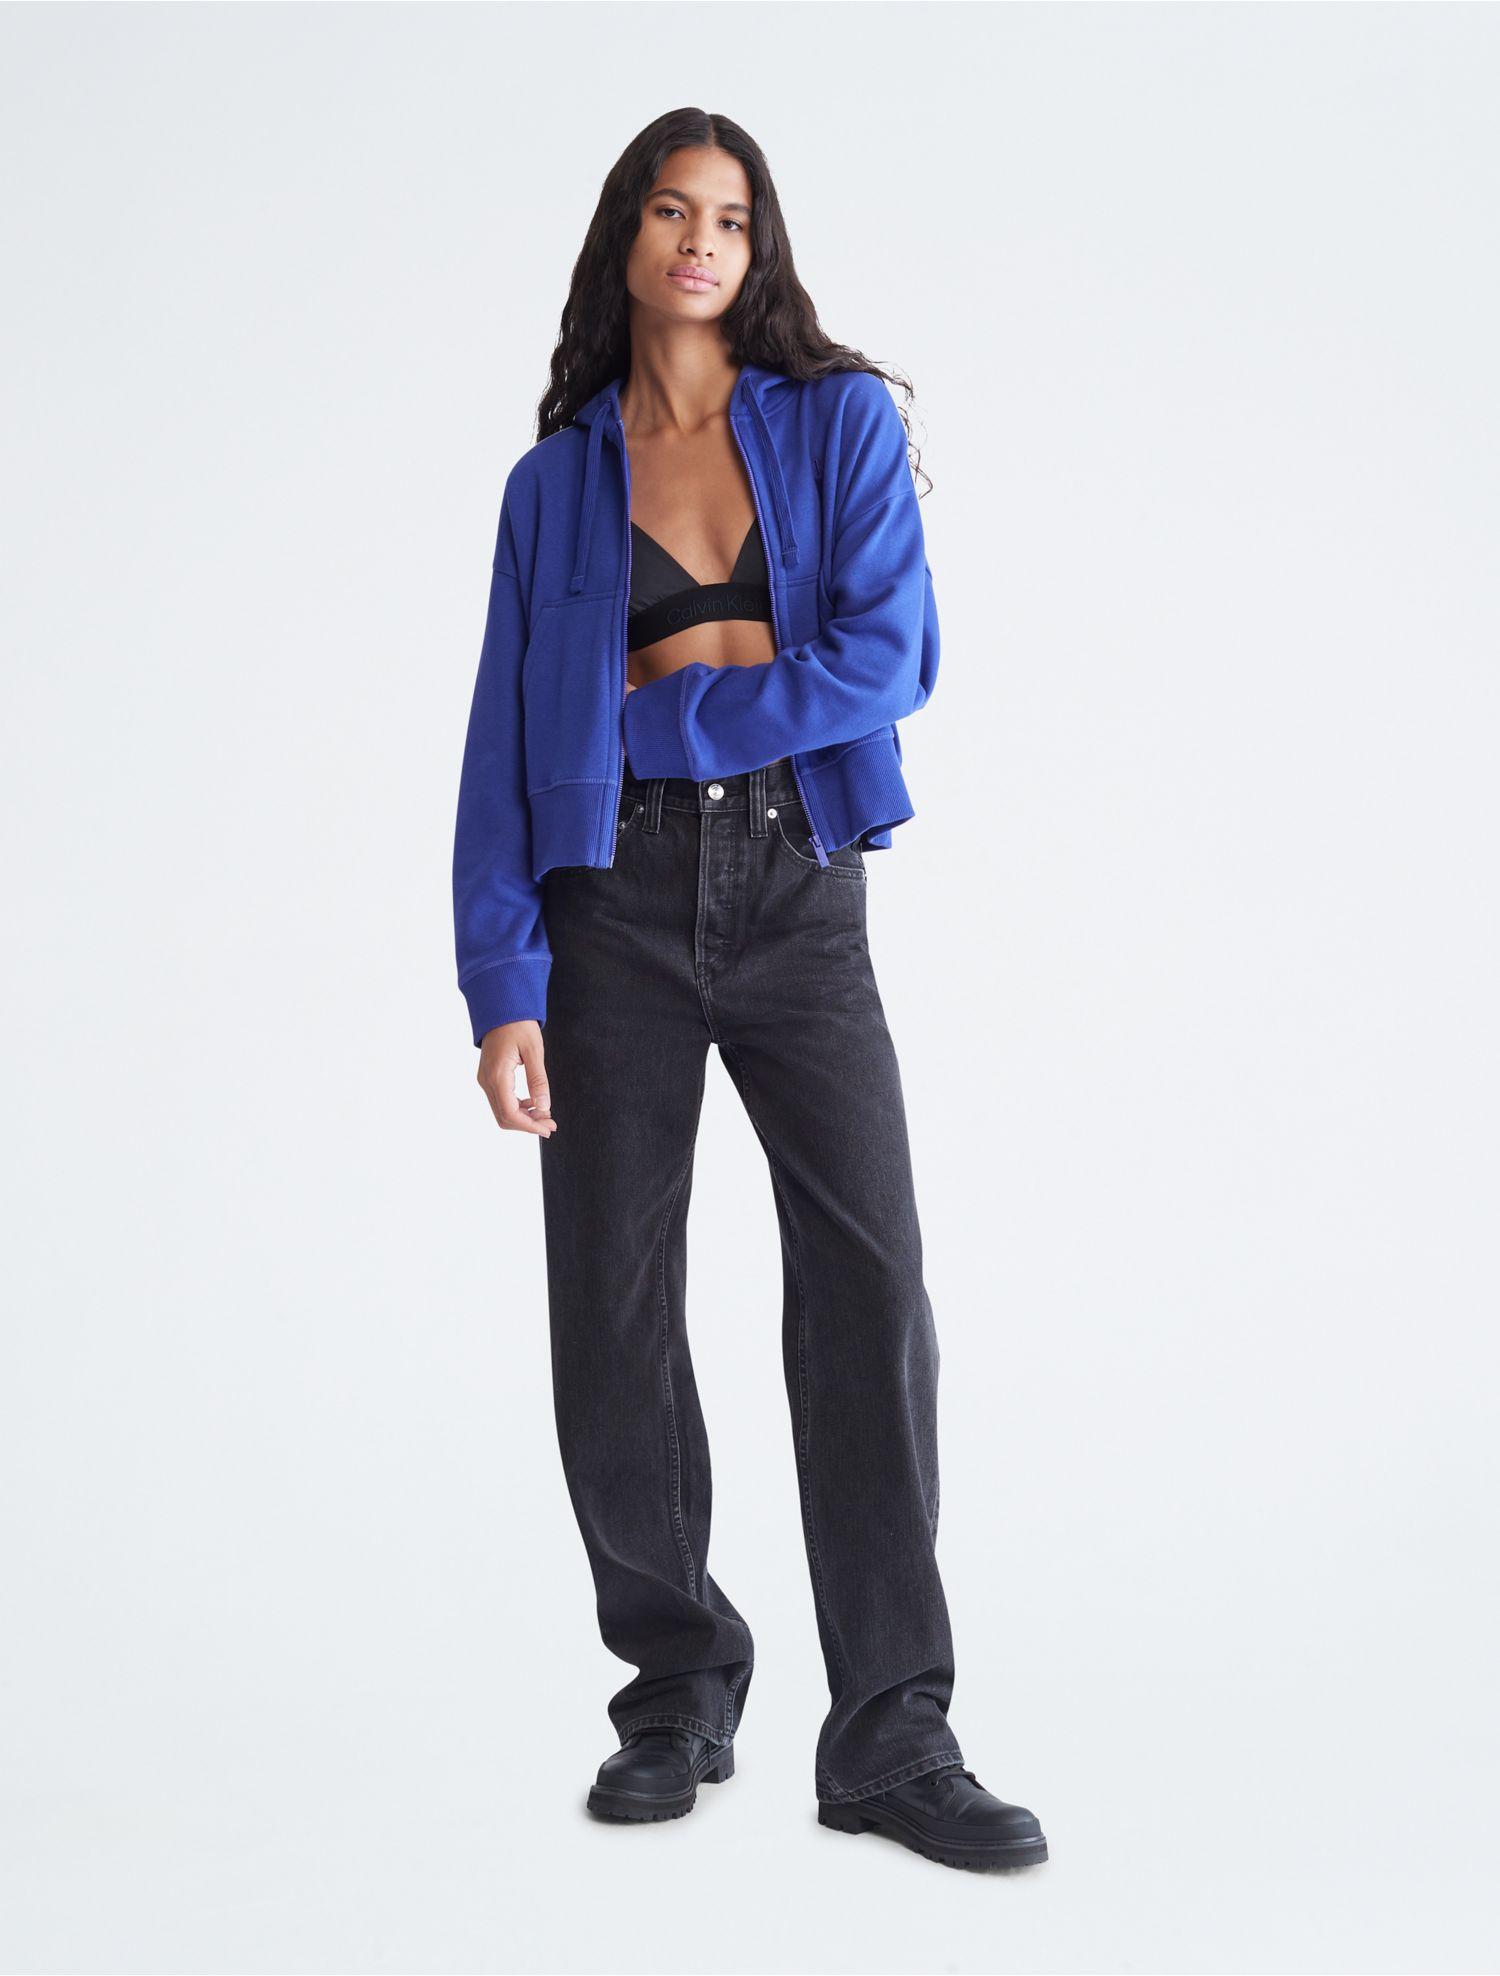 Calvin Klein Archive Logo Fleece Zip Hoodie in Blue | Lyst